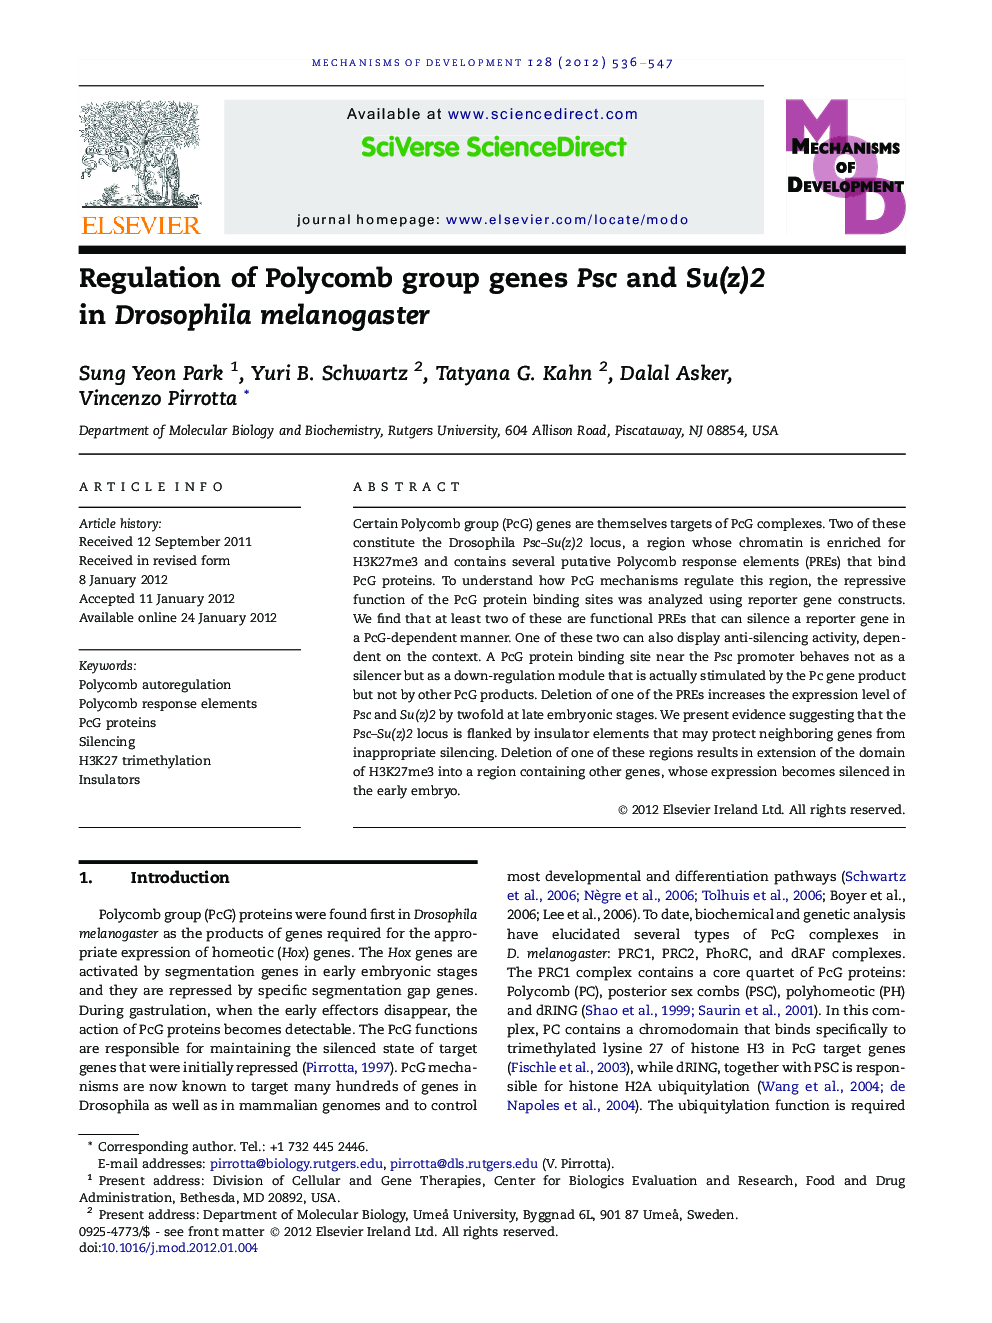 Regulation of Polycomb group genes Psc and Su(z)2 in Drosophila melanogaster